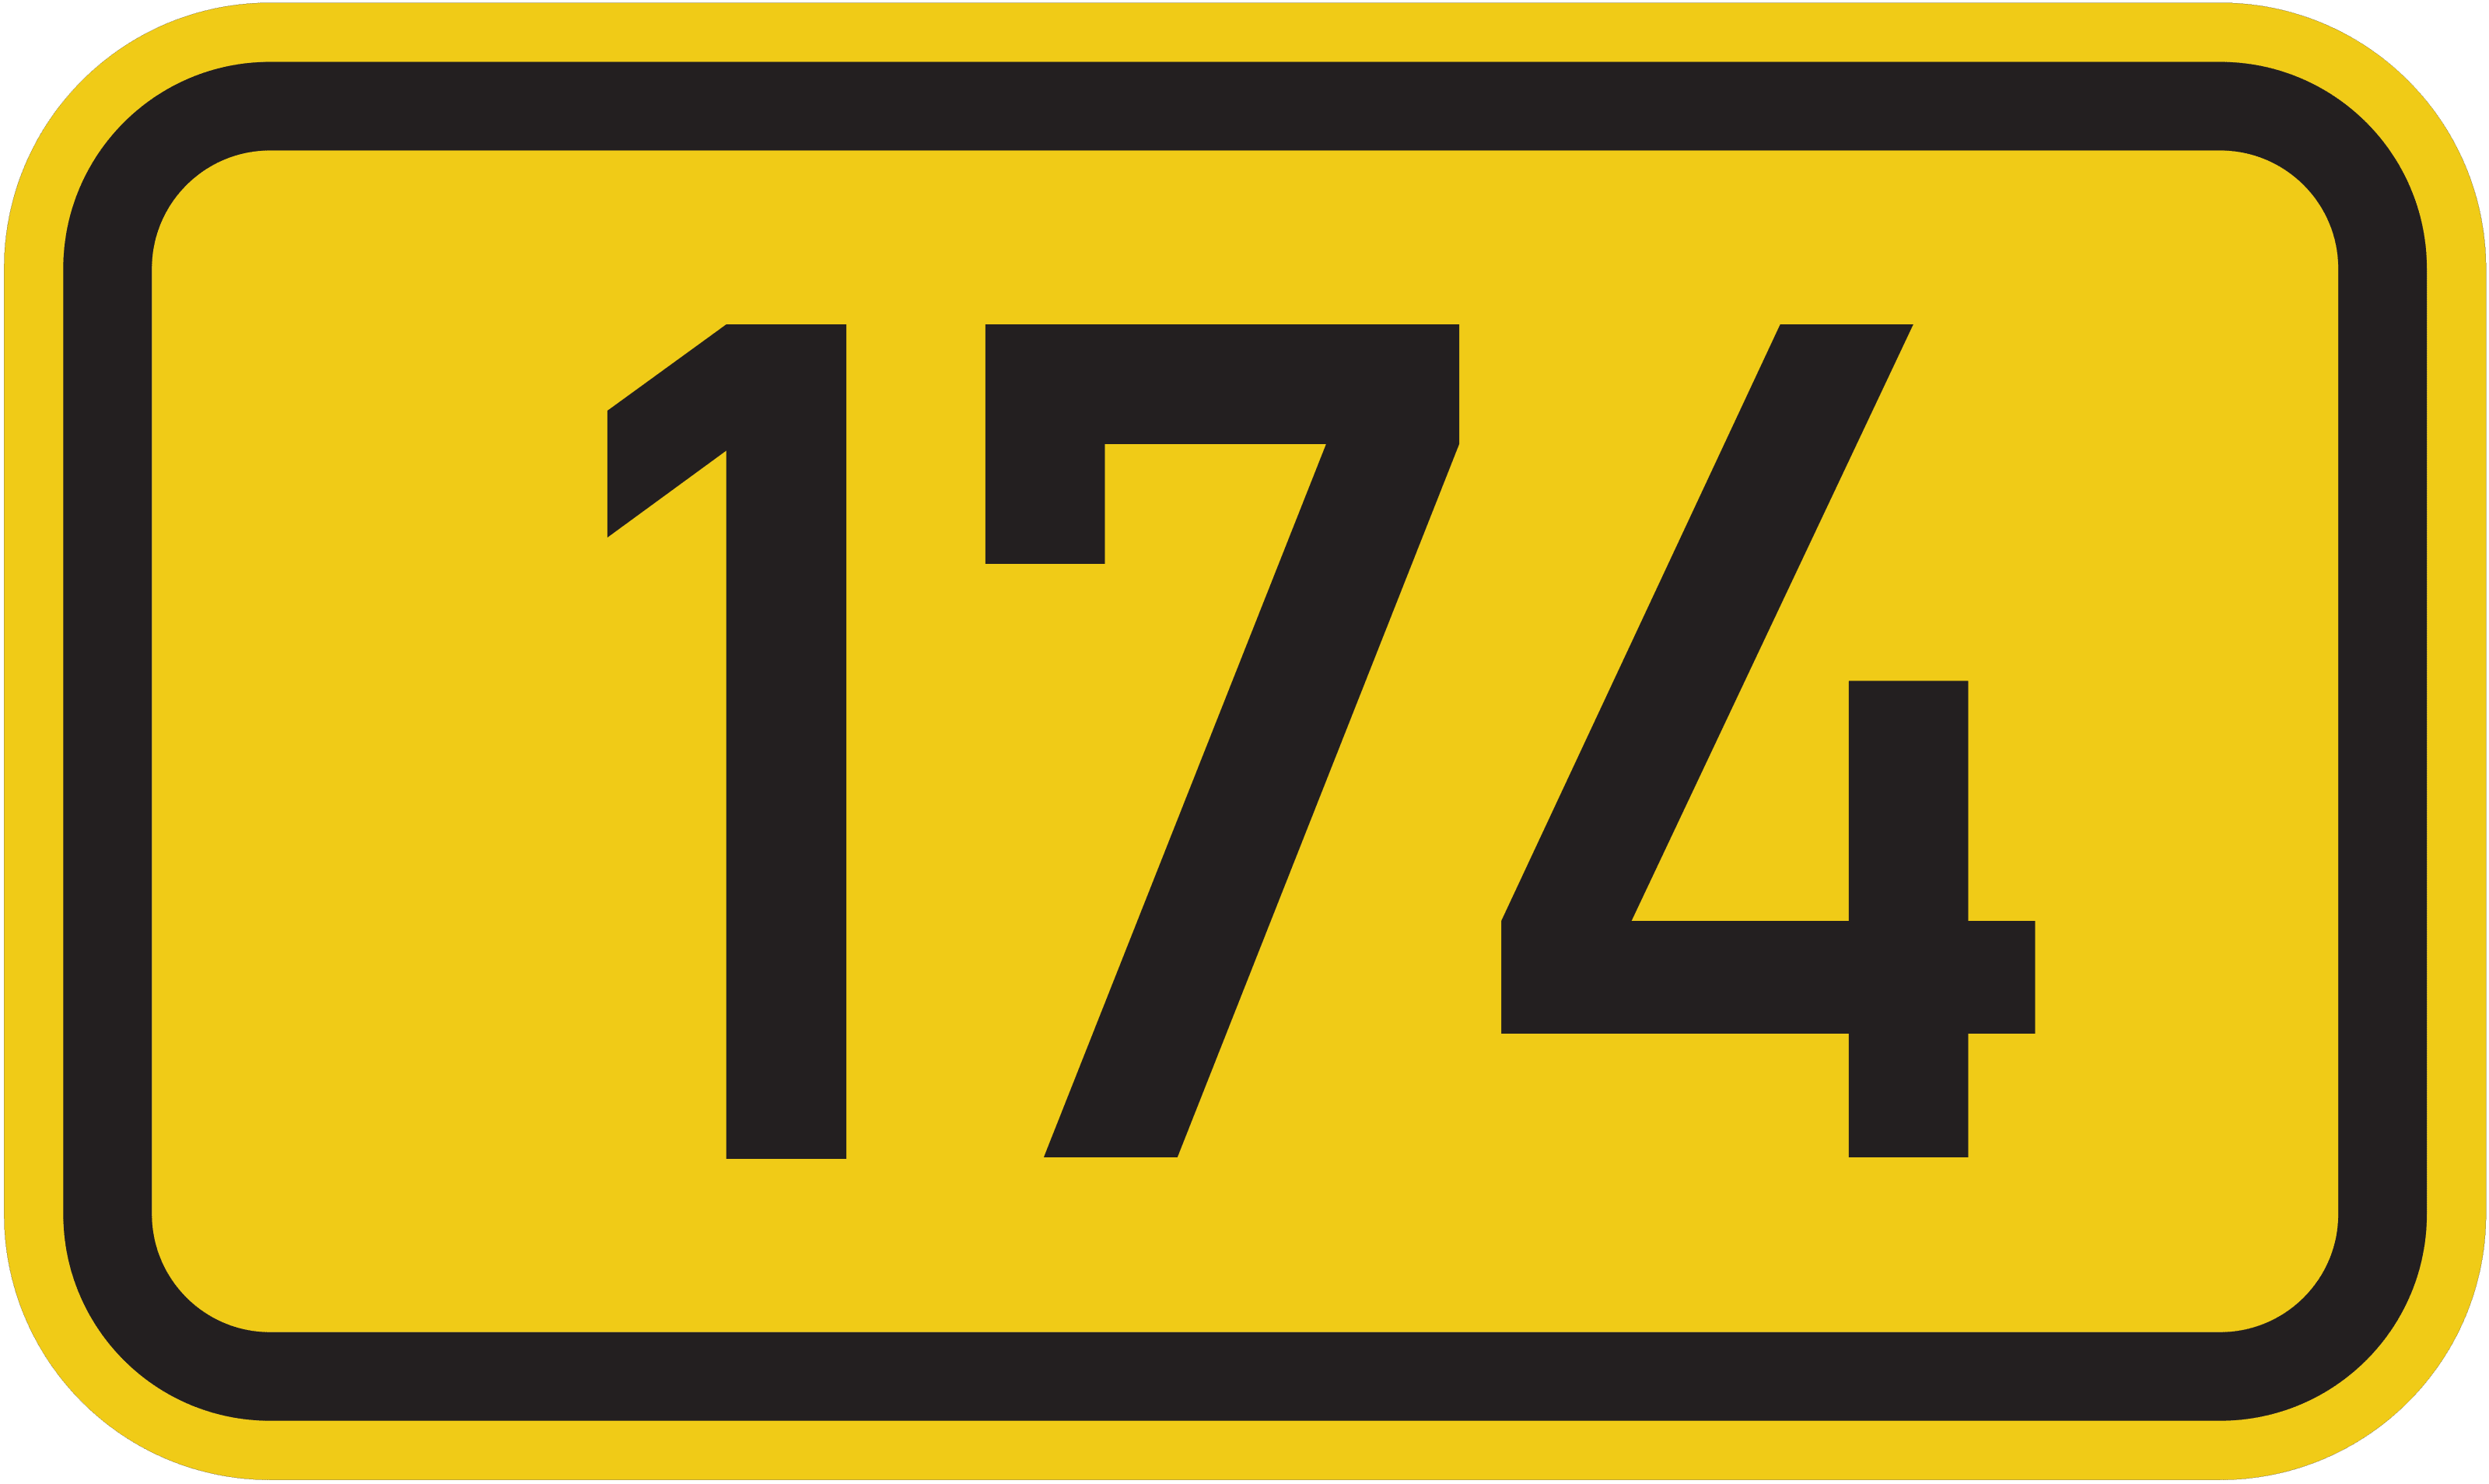 Straßenschild Bundesstraße 174